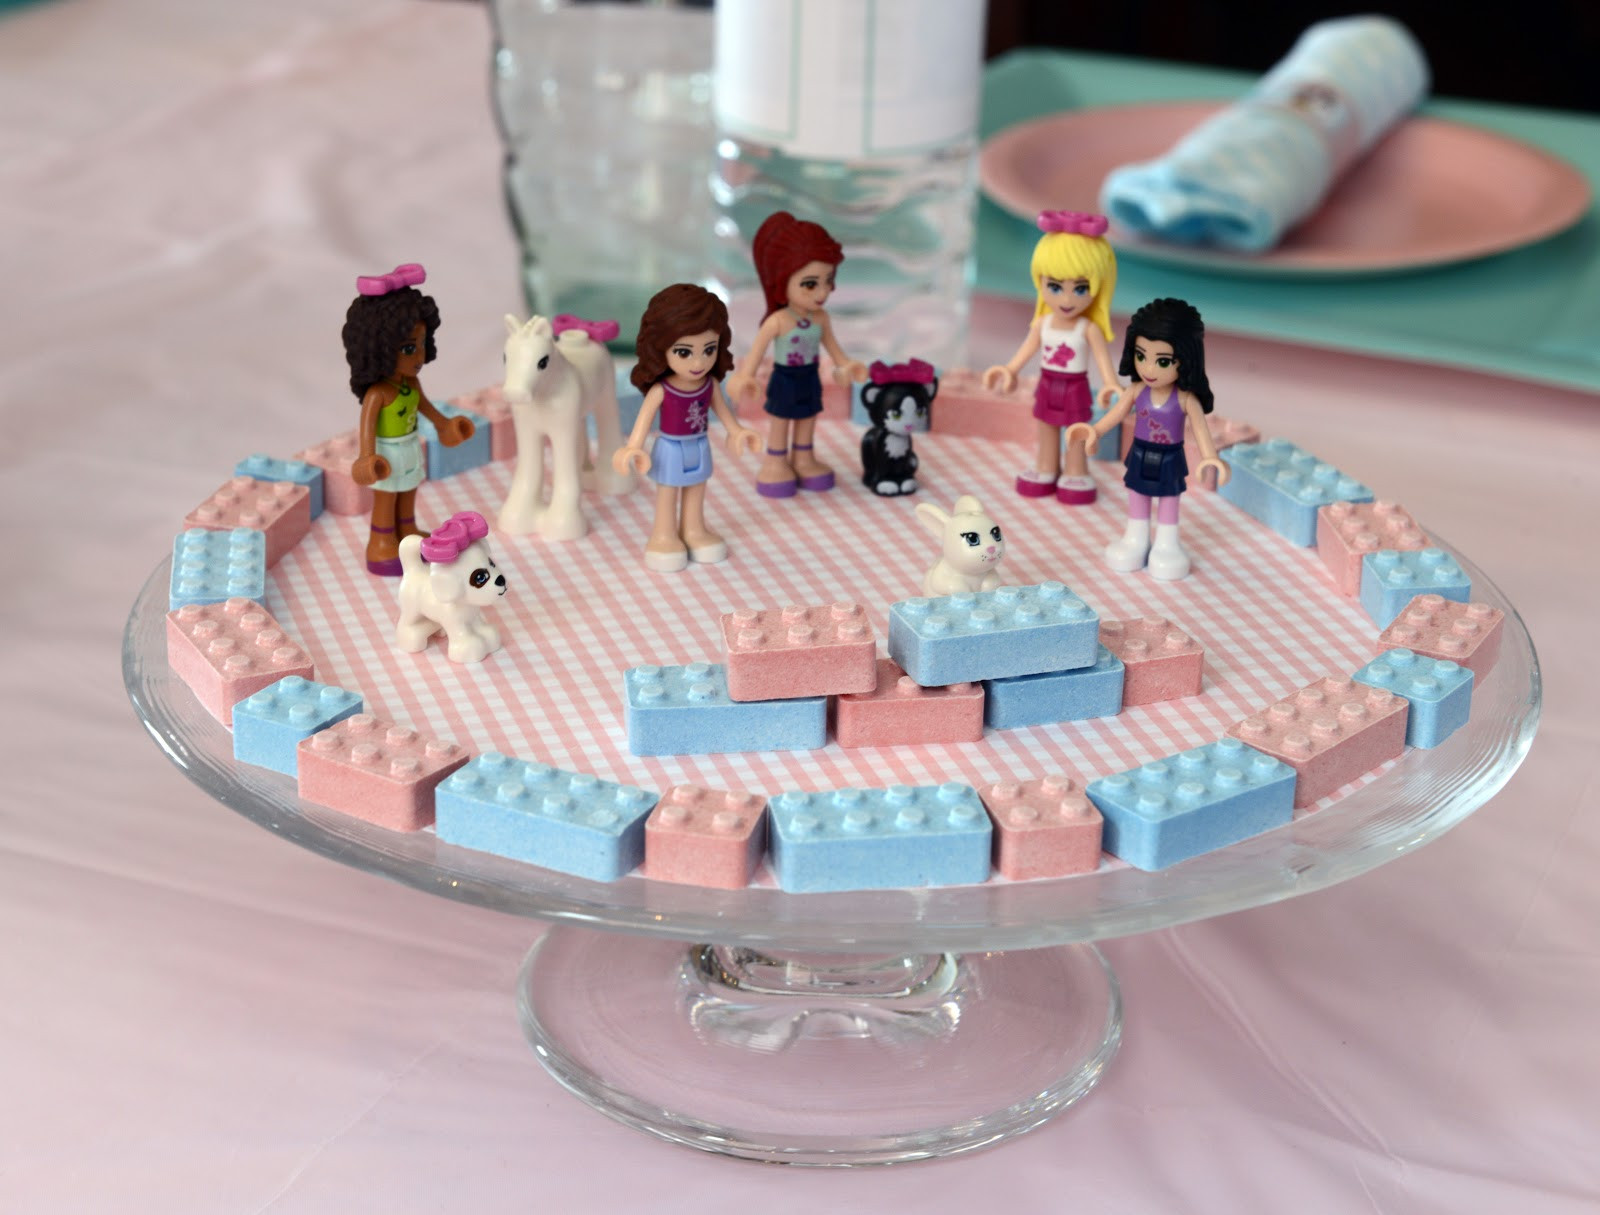 Lego Friends Birthday Party Supplies
 Fun Fabrication Lego Friends Birthday Party